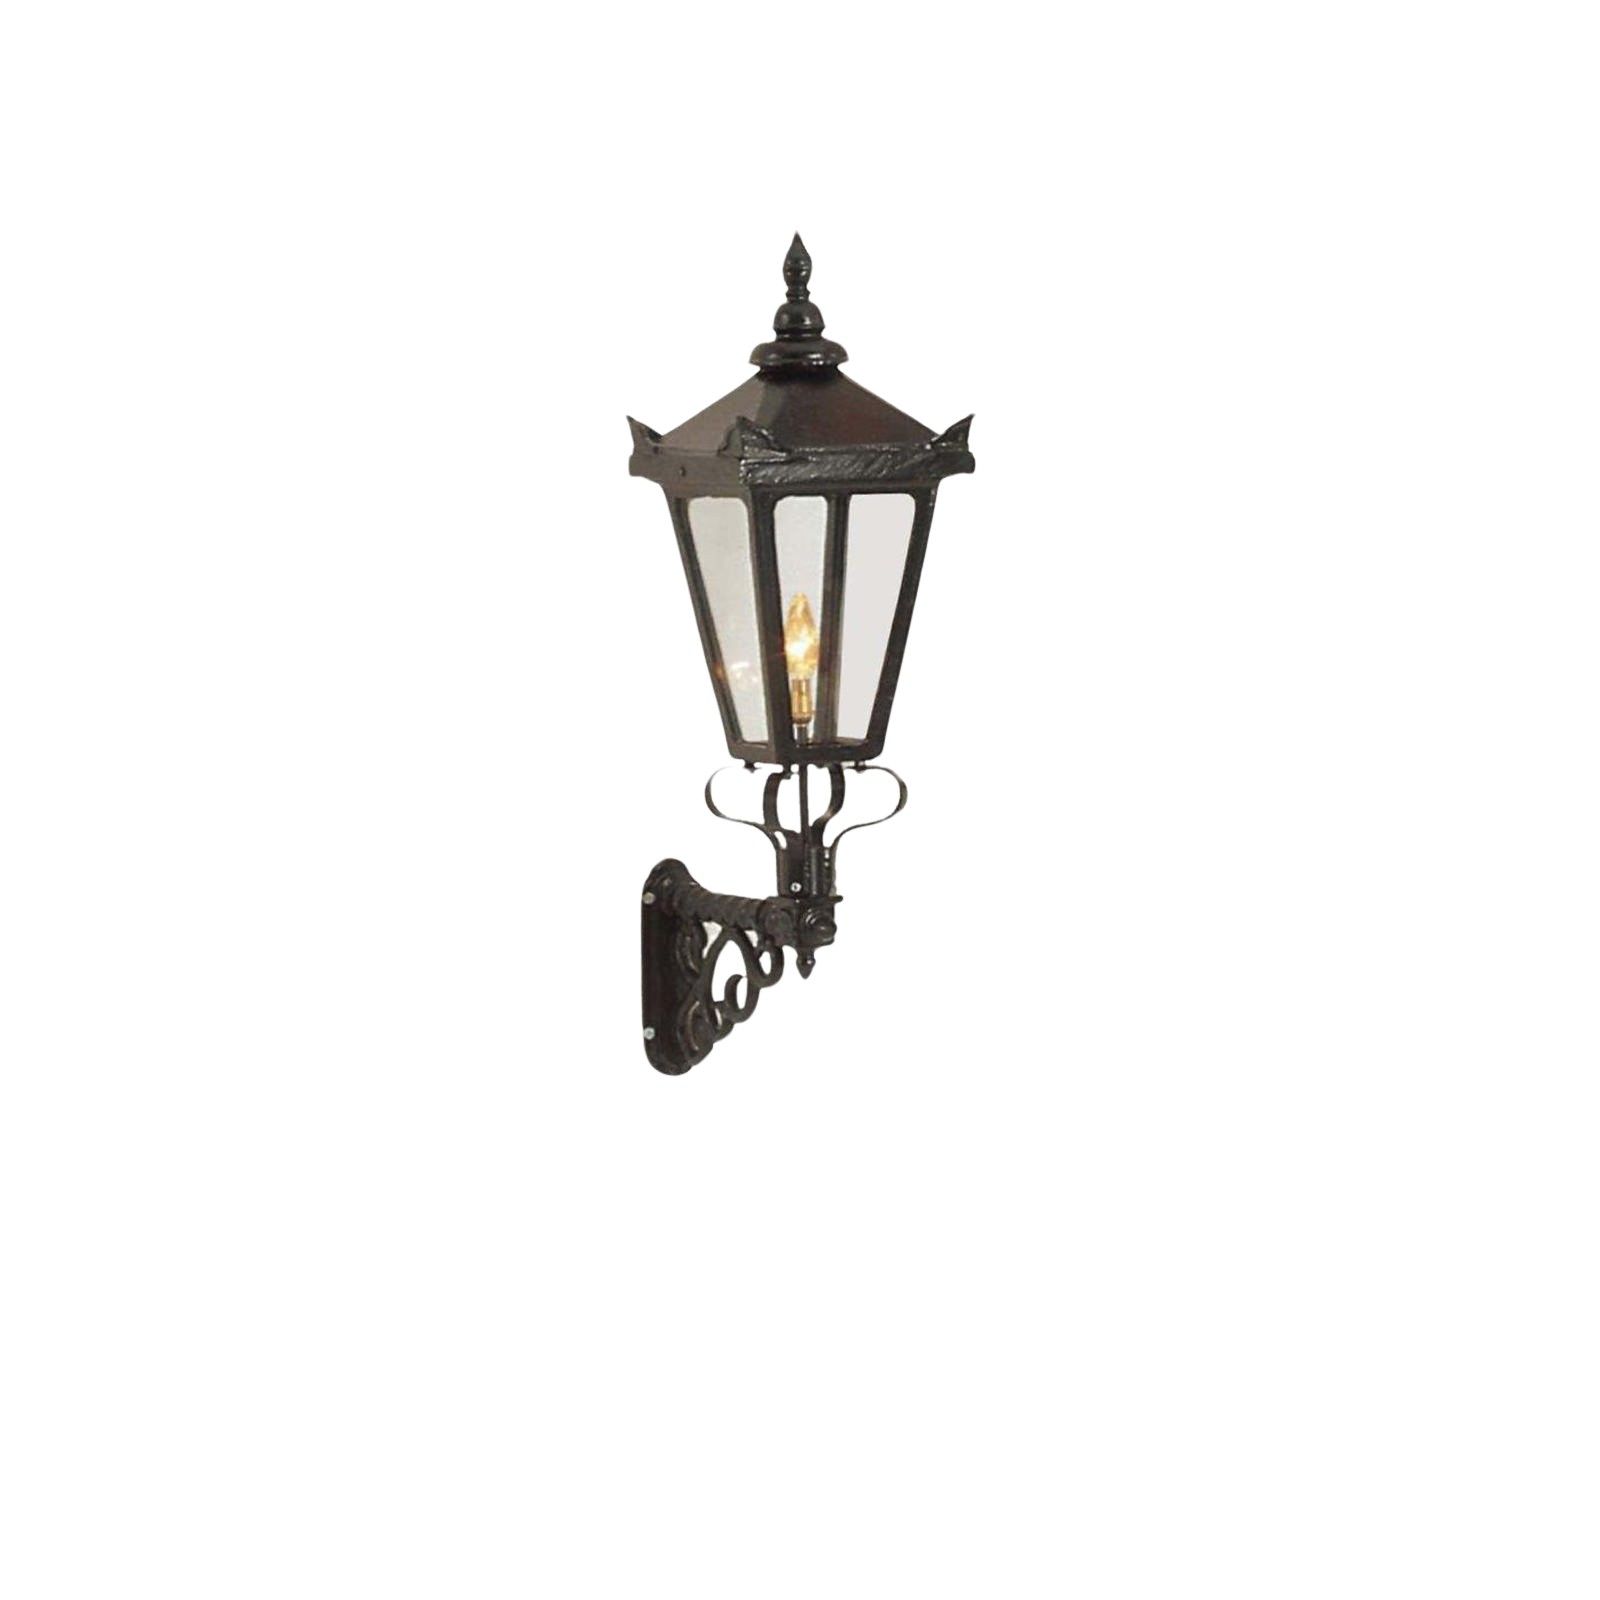 Medium square tamar wall lantern with cast bracket